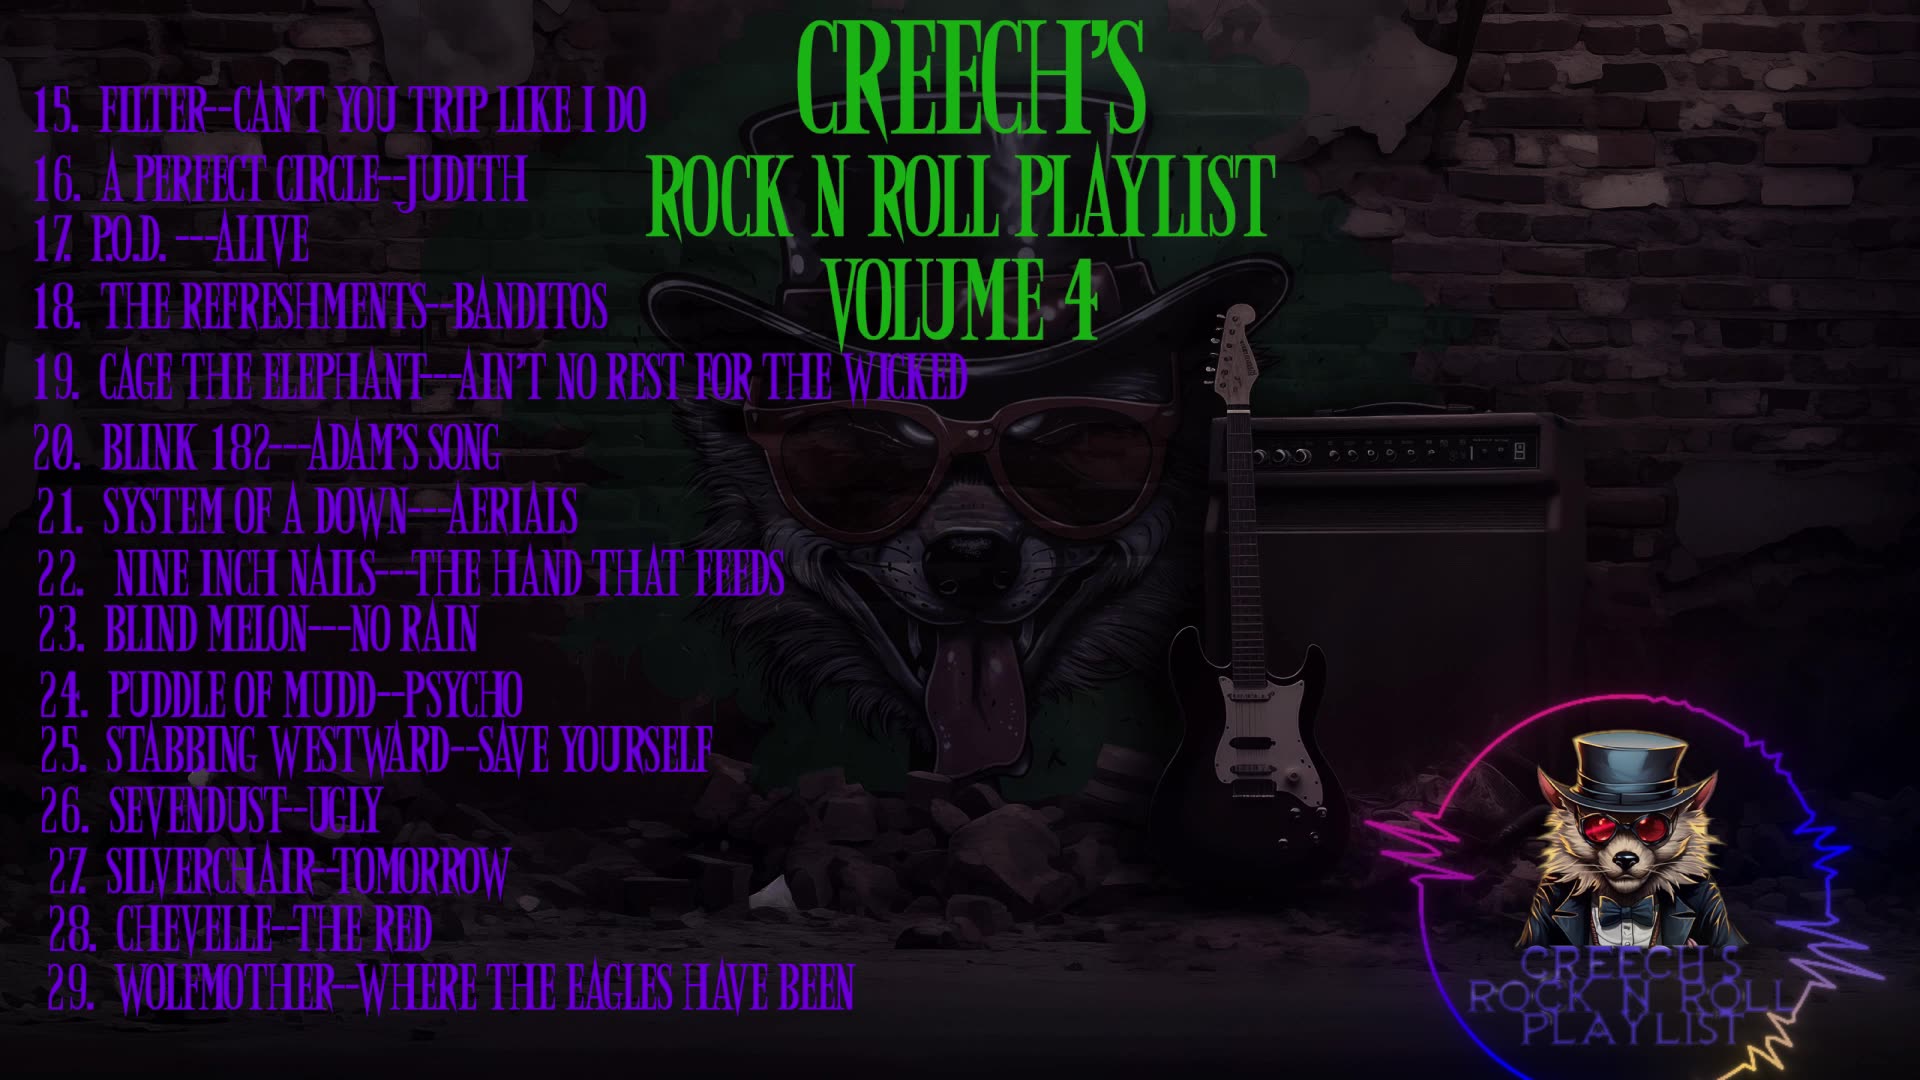 Creech's Rock n Roll Playlist Volume 4